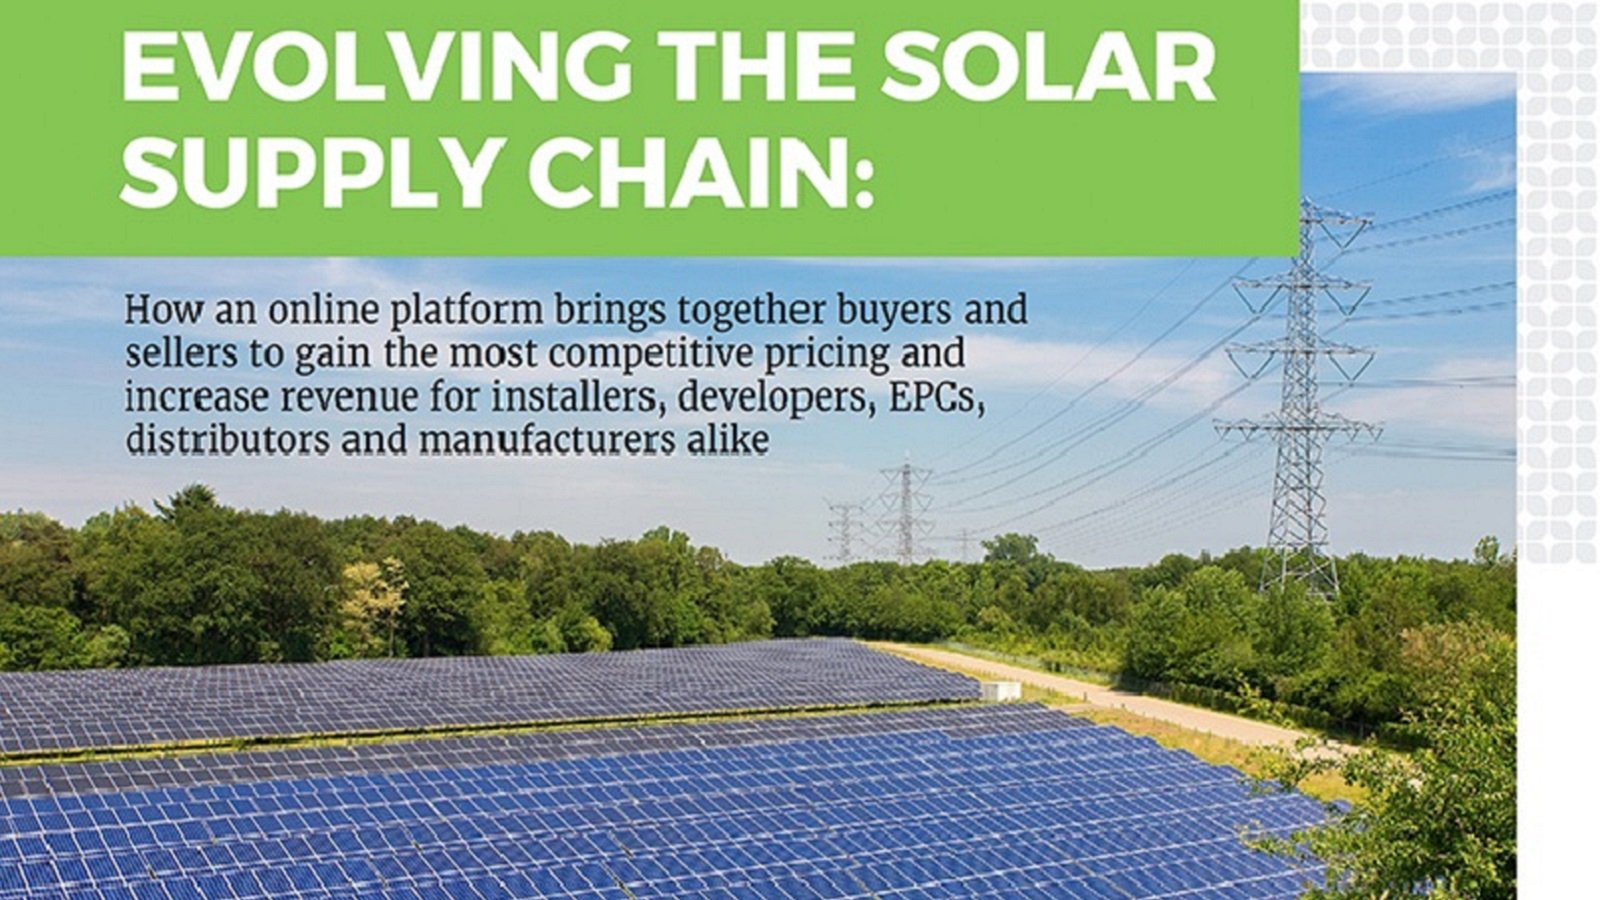 Online marketplaces help solar companies gain efficiency